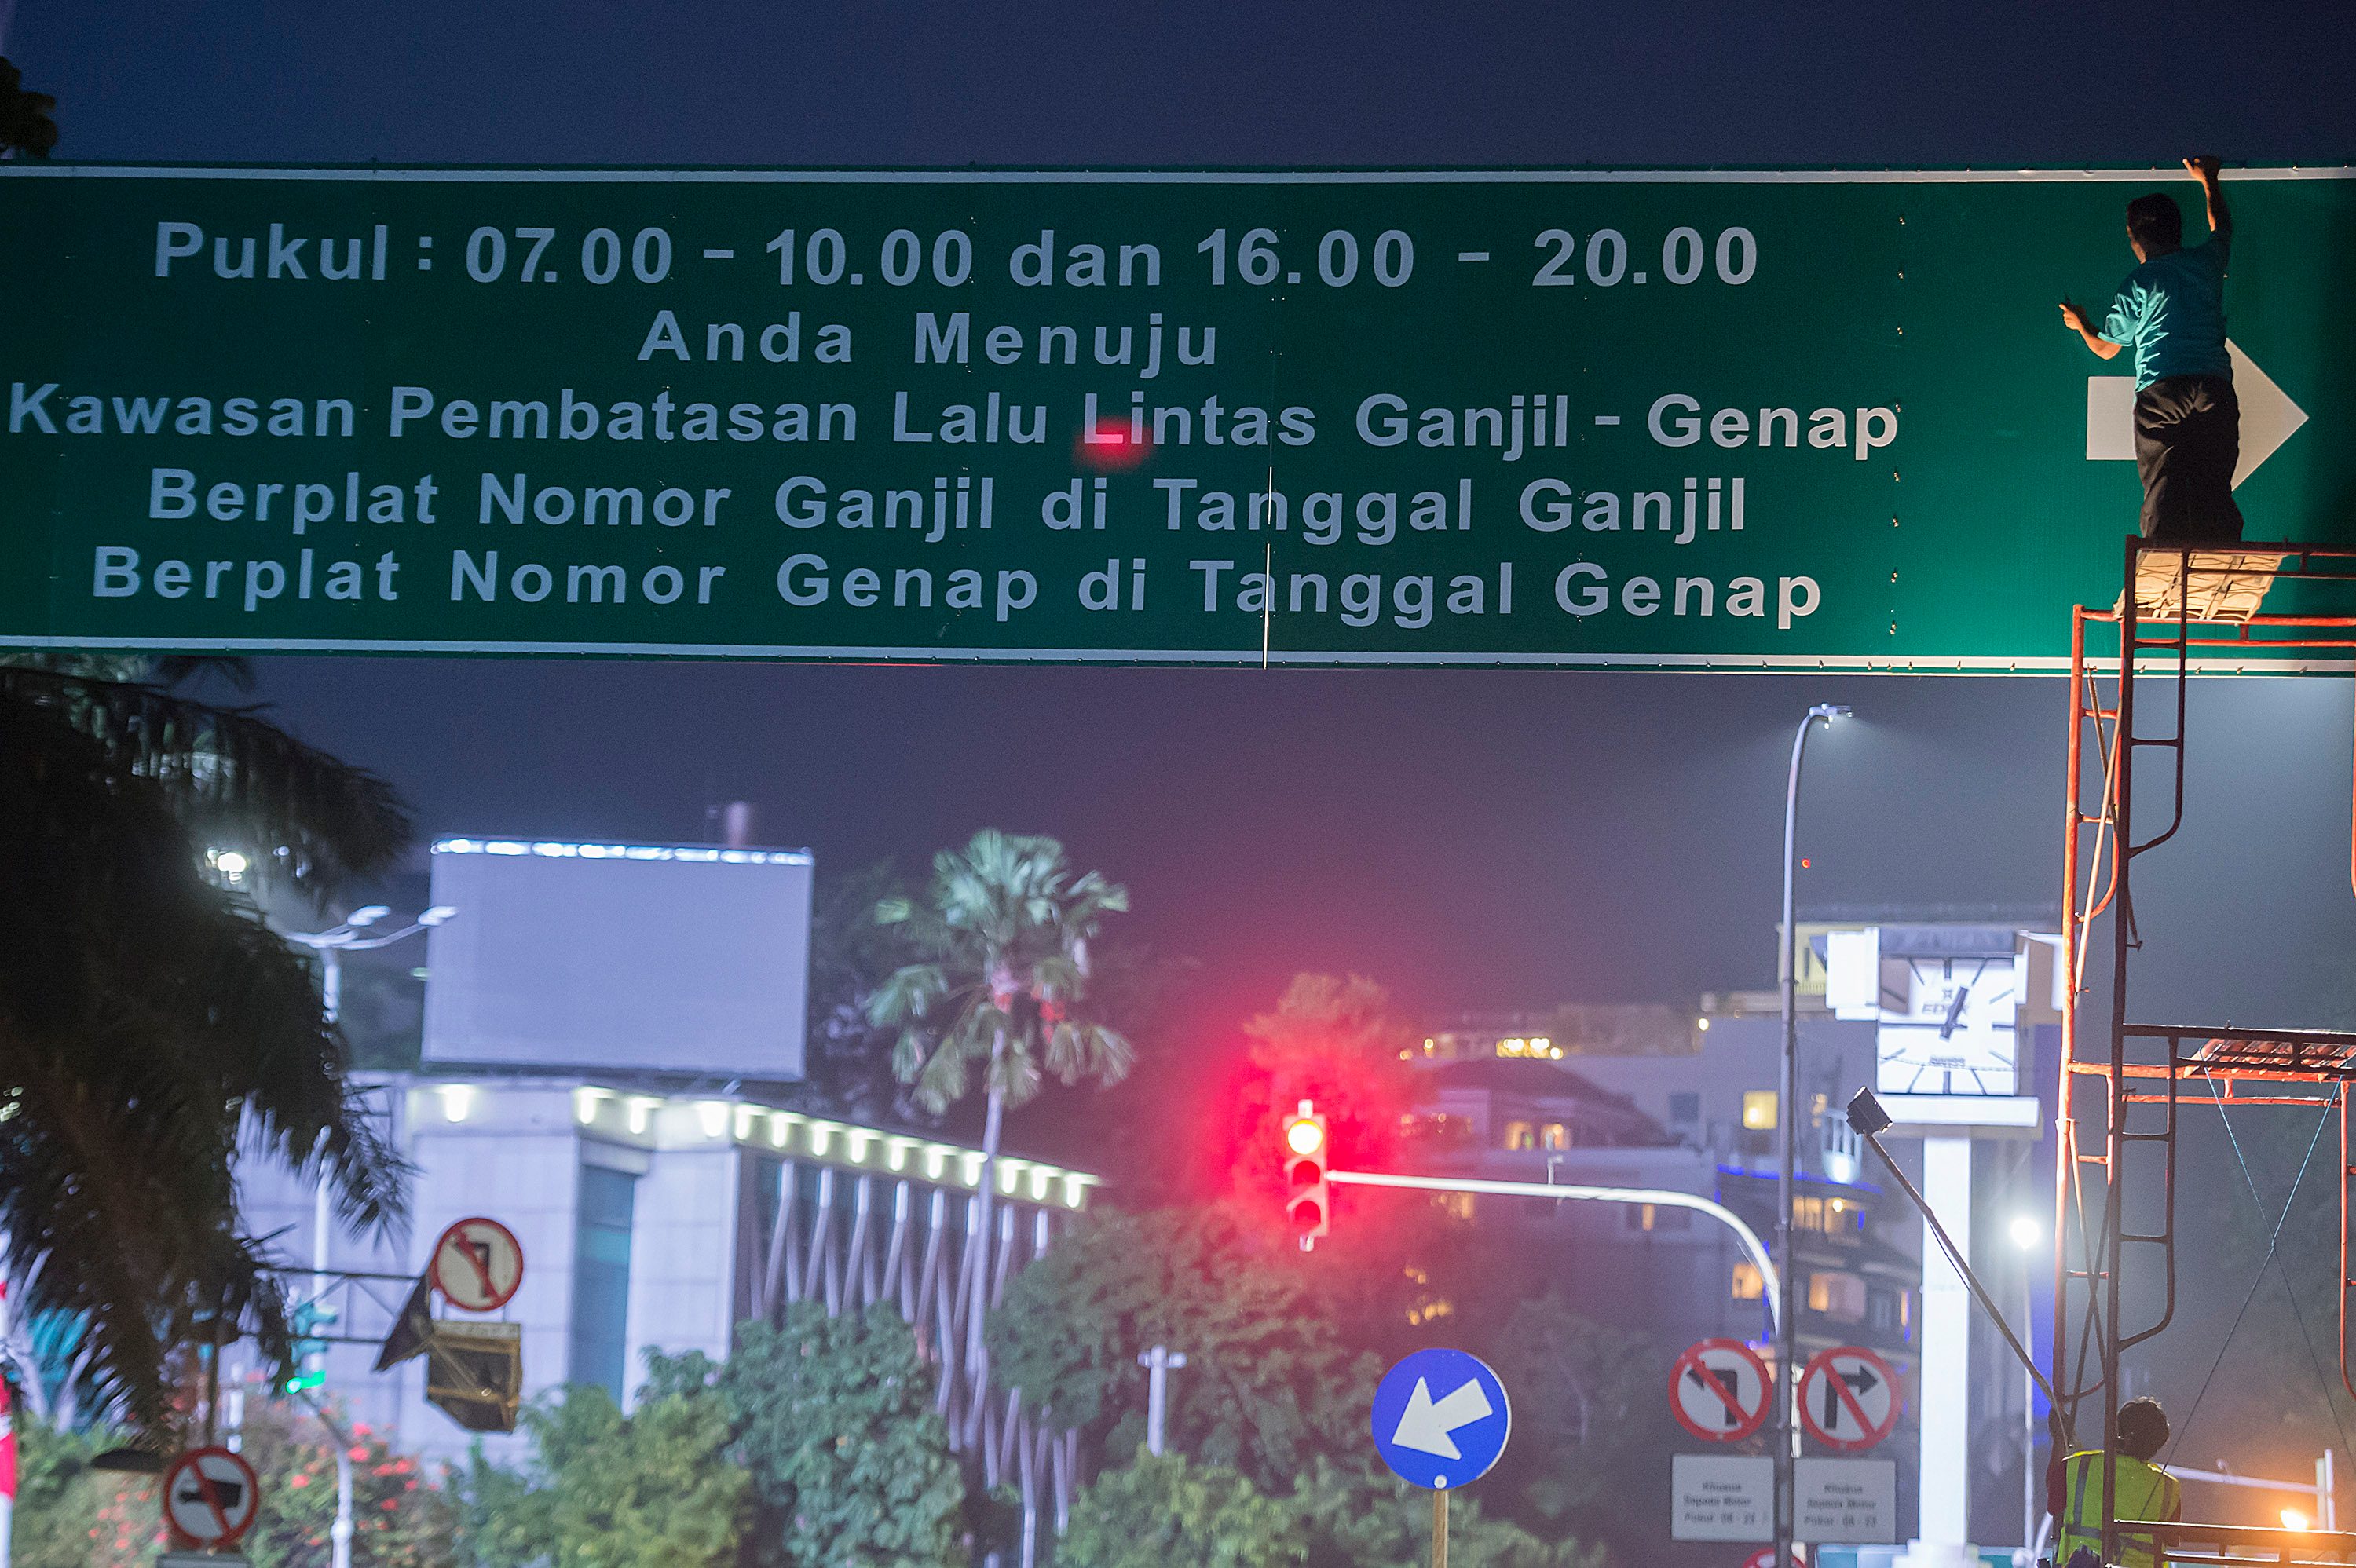 Petugas Dinas Perhubungan melakukan pekerjaan pemasangan papan informasi penerapan sistem ganjil dan genap di Jalan Kebon Sirih, Jakarta, pada 27 Agustus 2016. Foto oleh Widodo S. Jusuf/Antara 